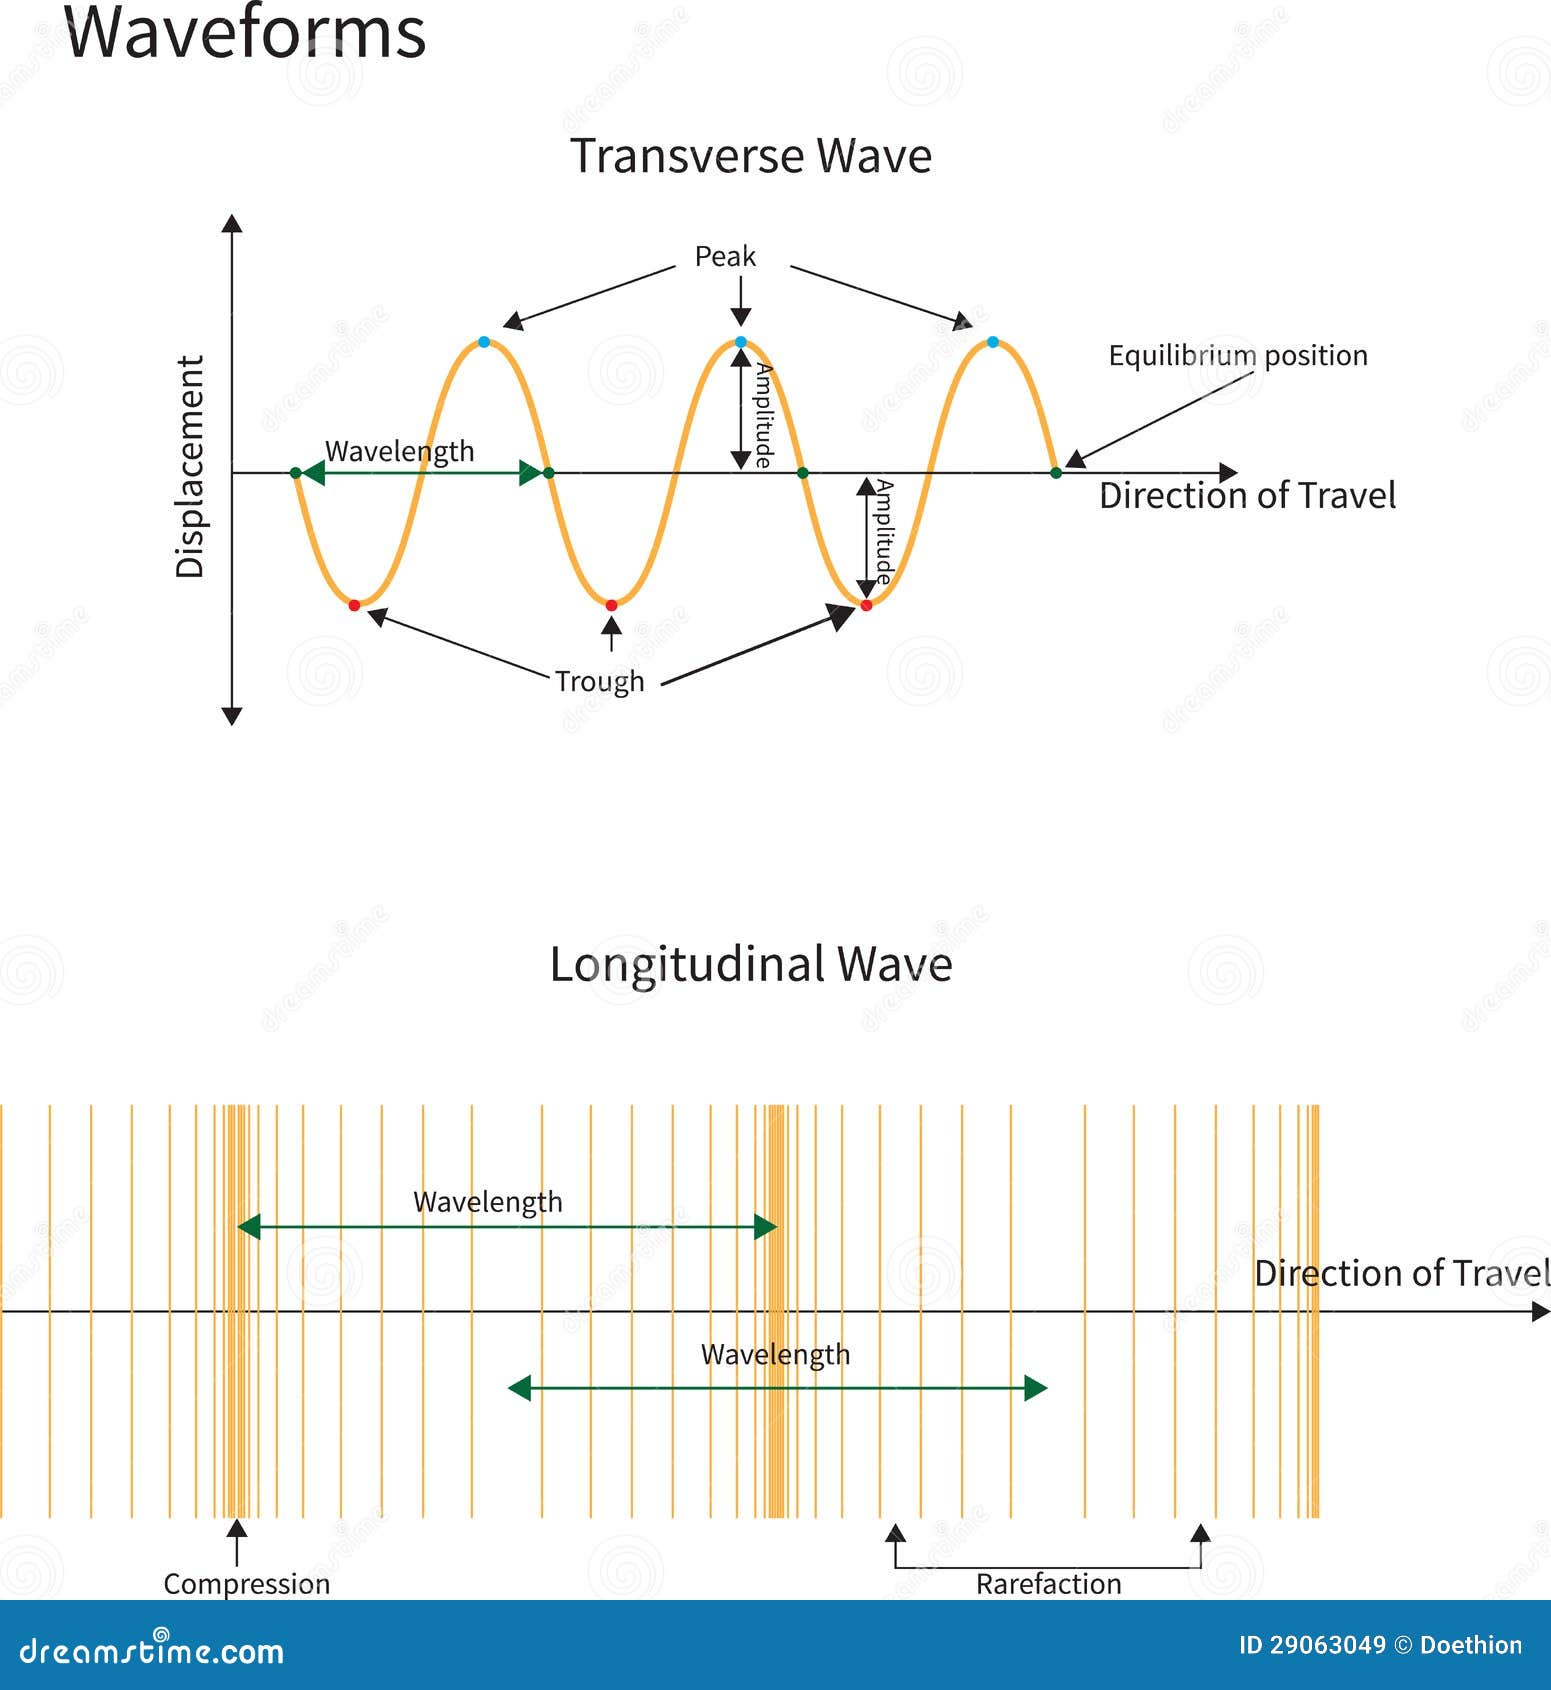 transverse and longitudinal waves